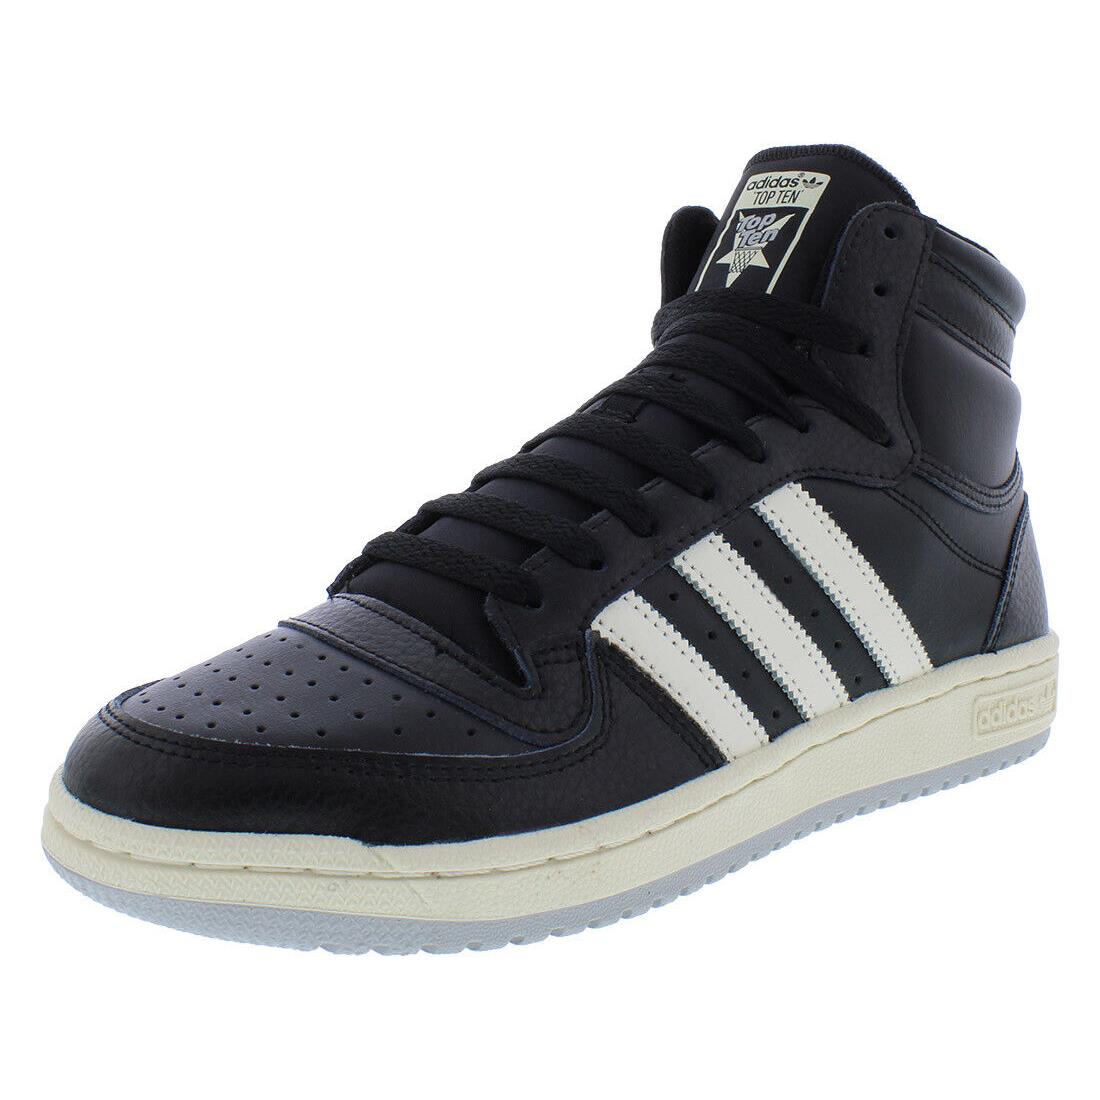 Adidas Top Ten Rb Mens Shoes - Black/White, Main: Black